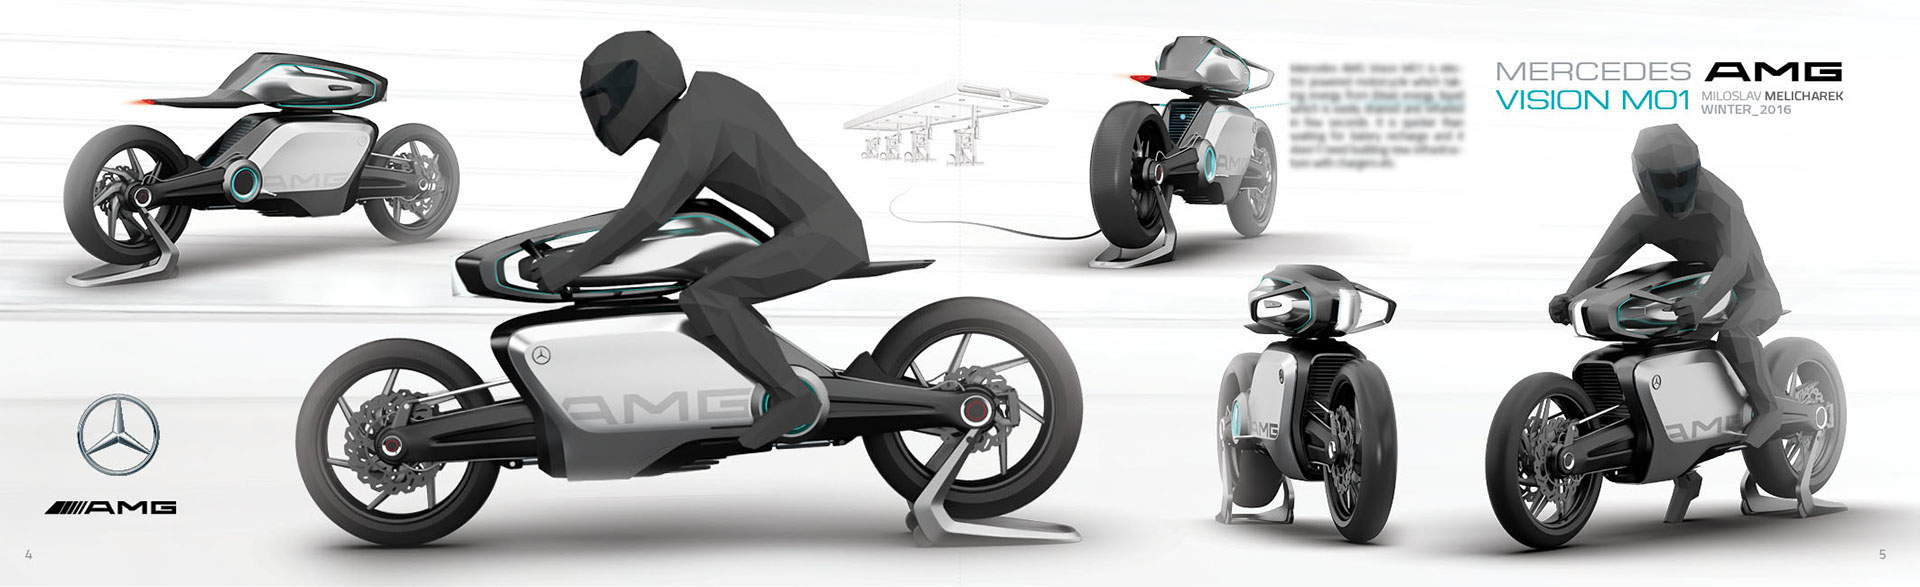 Mercedes Benz AMG Motorcycle - VISION M01 - design by MMelicharek_01